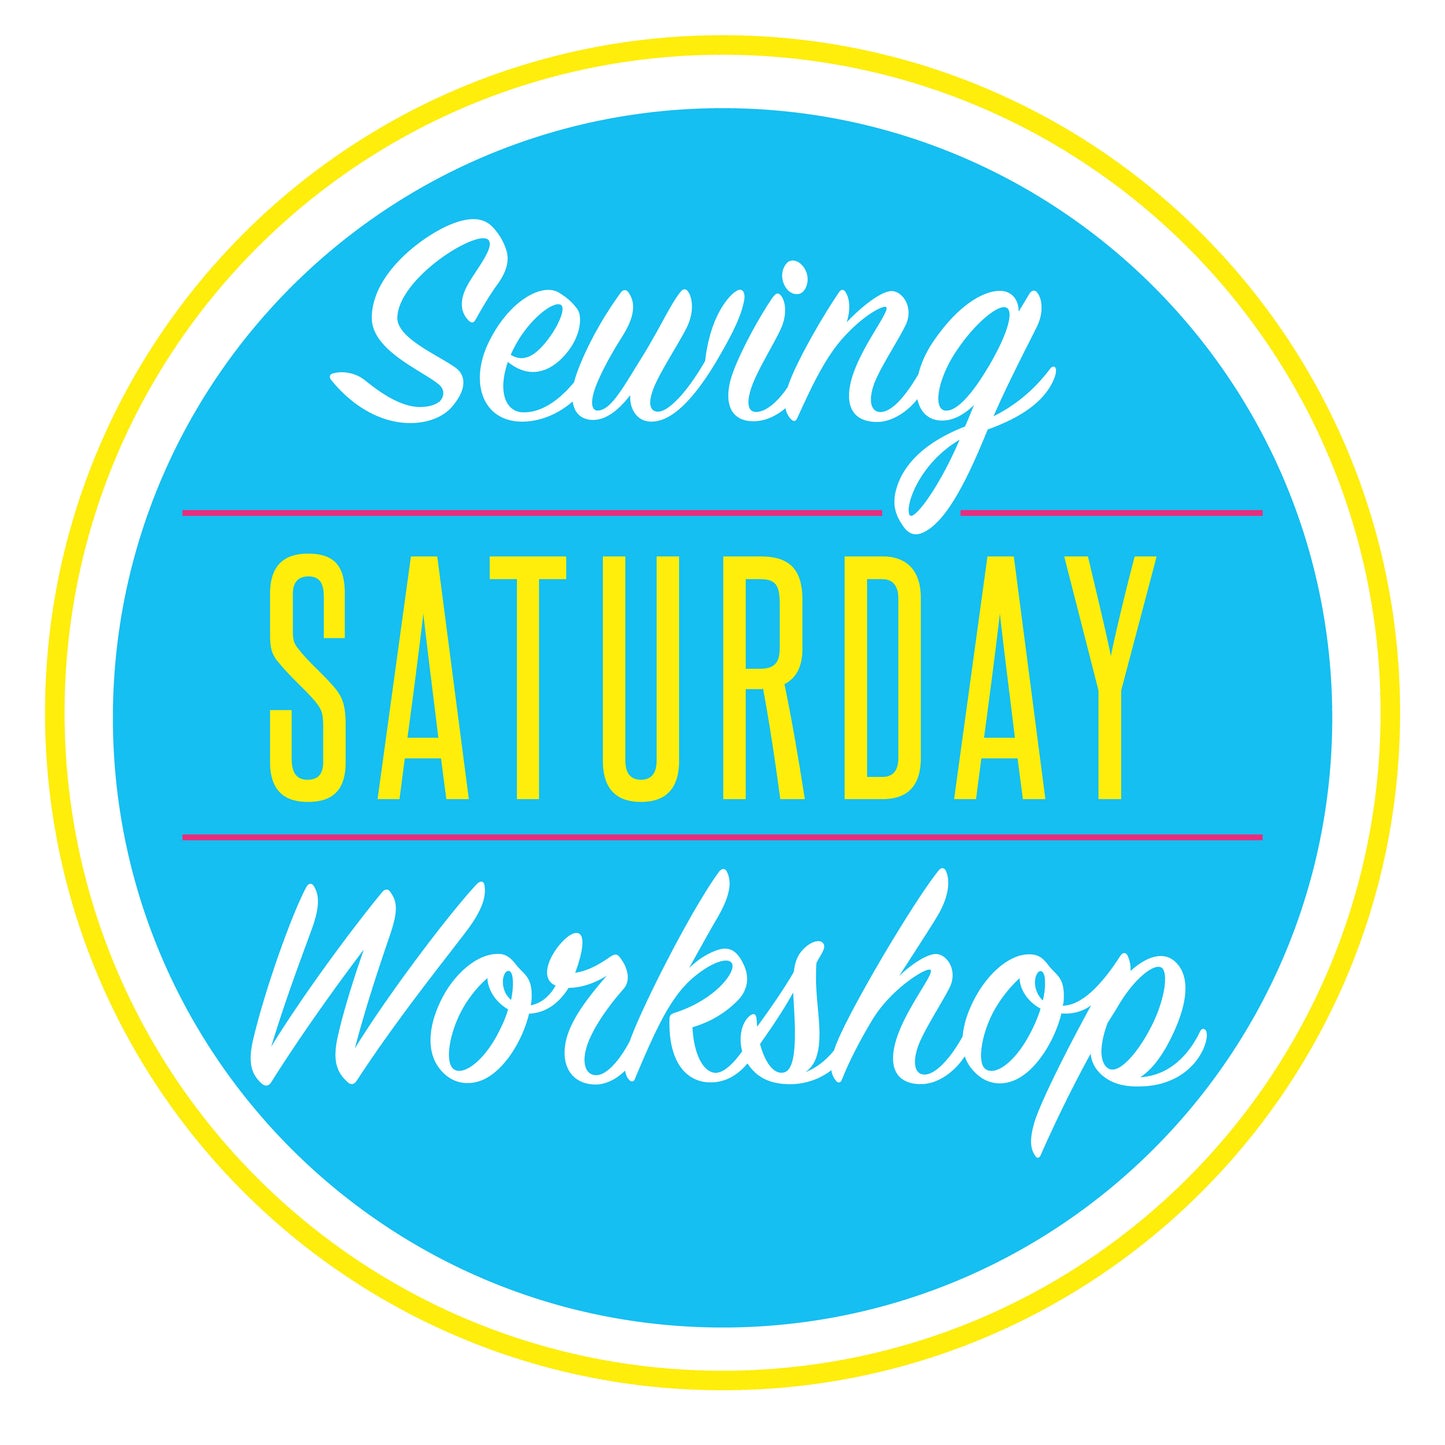 Sewing Workshop: Saturday, June 29, 9am-3pm